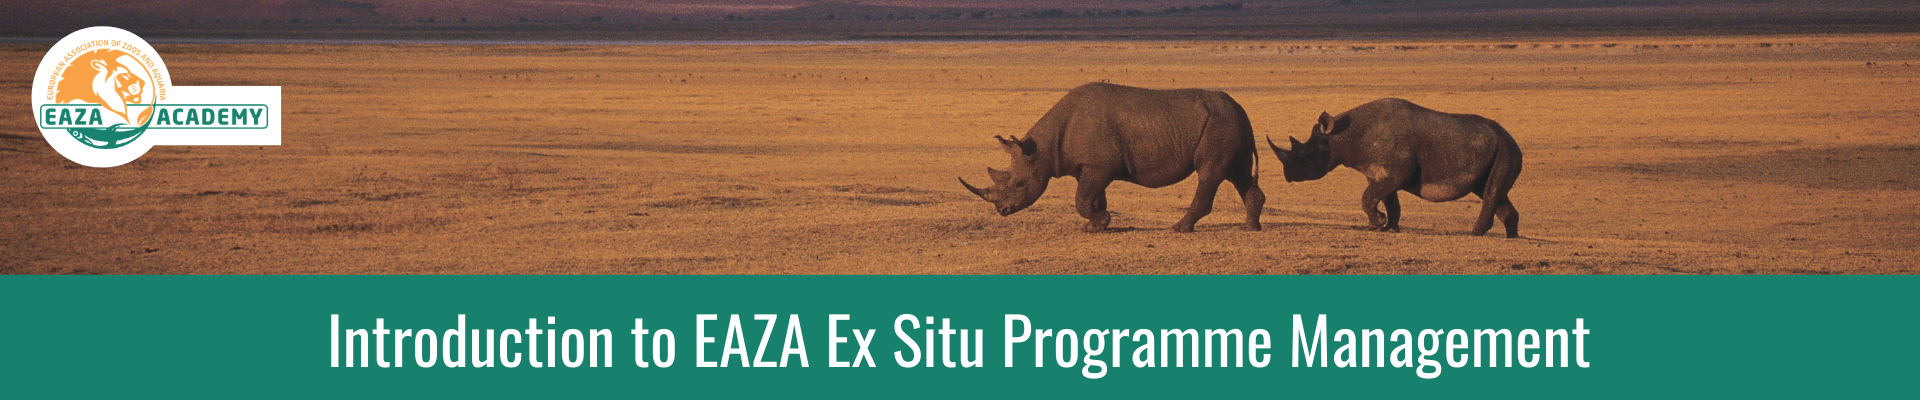 Introduction to EAZA Ex situ Programme Management